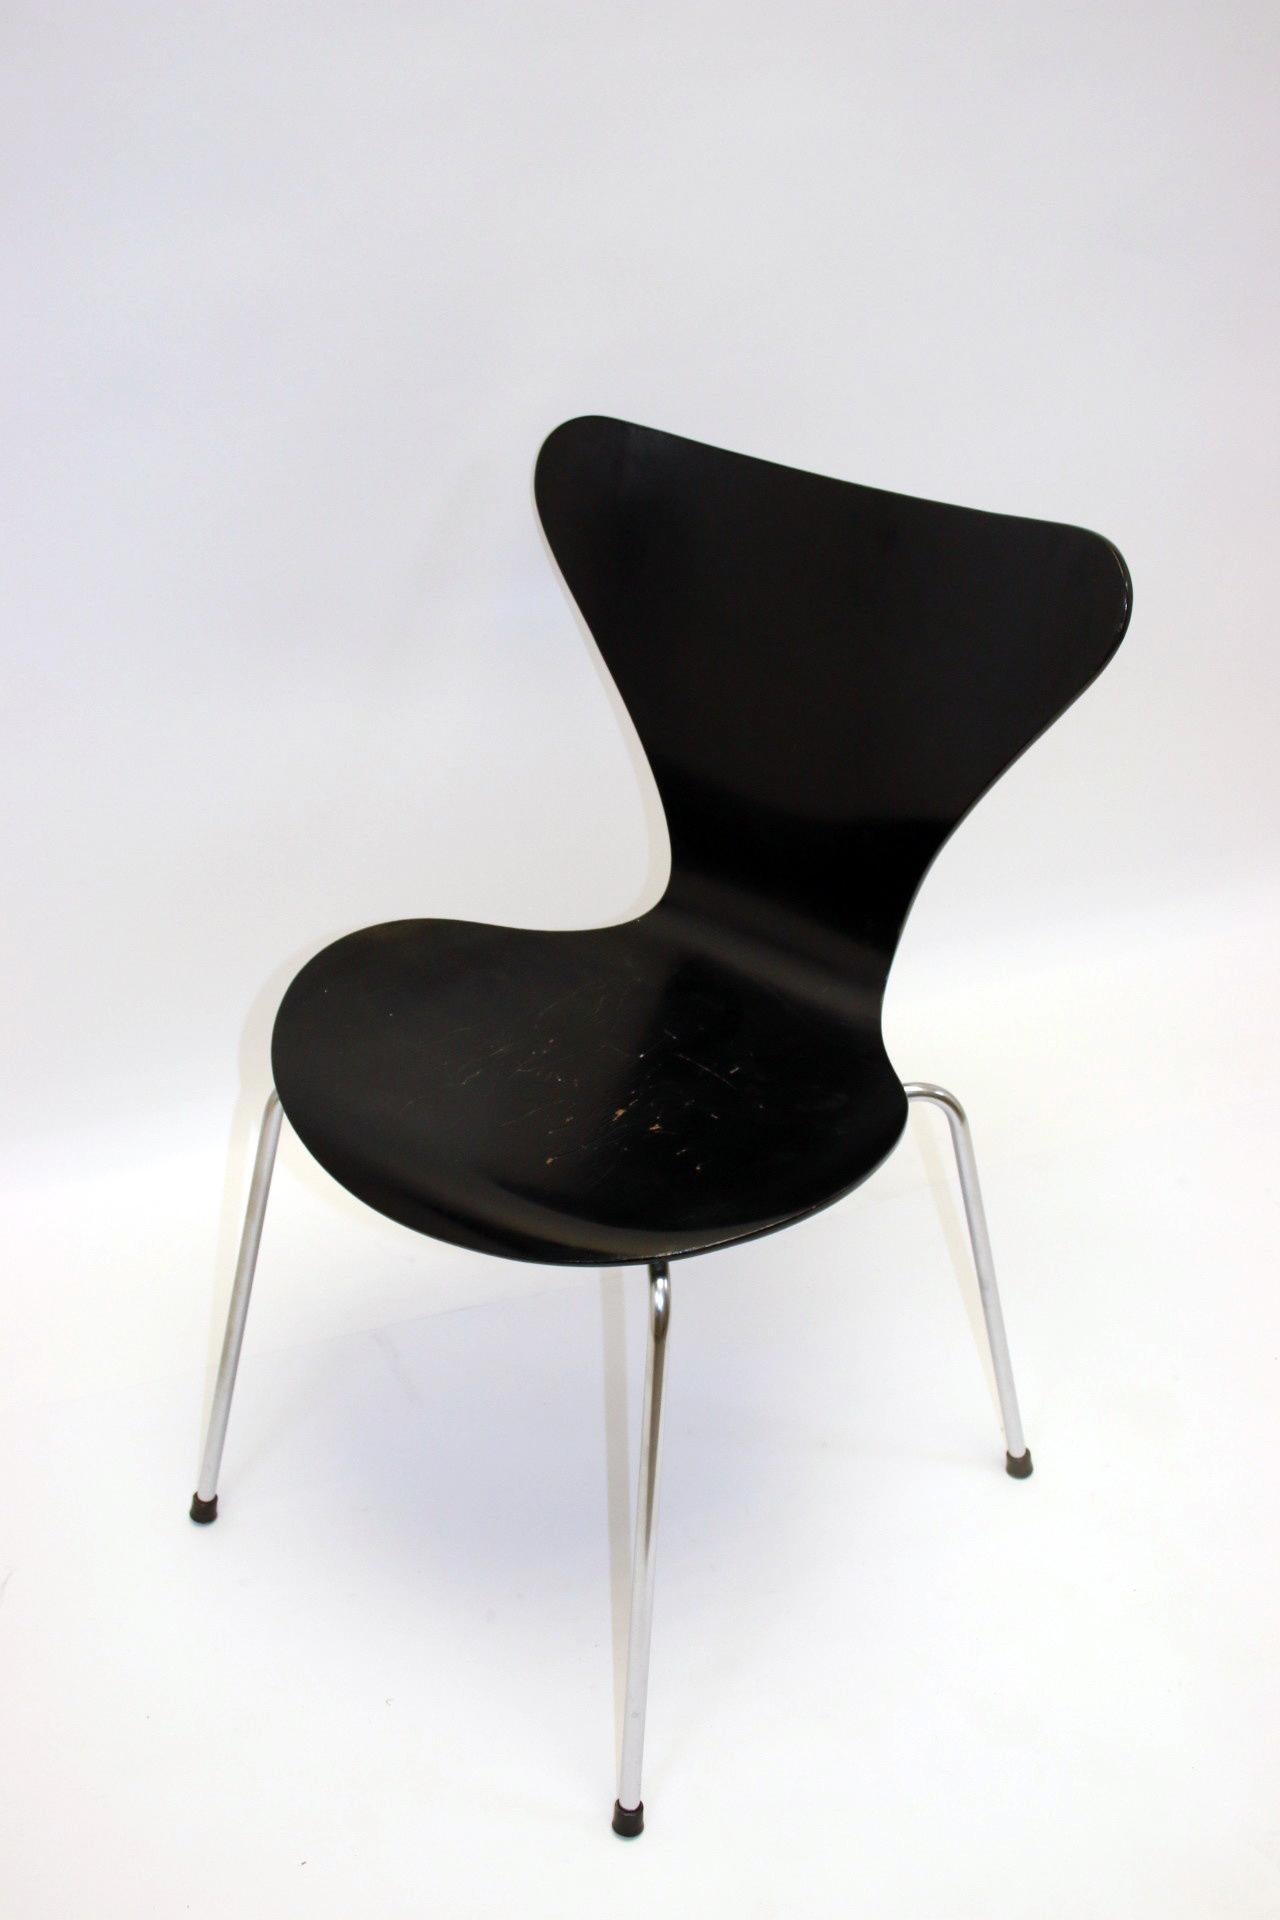 Danish Fritz Hansen Chair Model 3107 Made by Arne Jacobsen, 1955